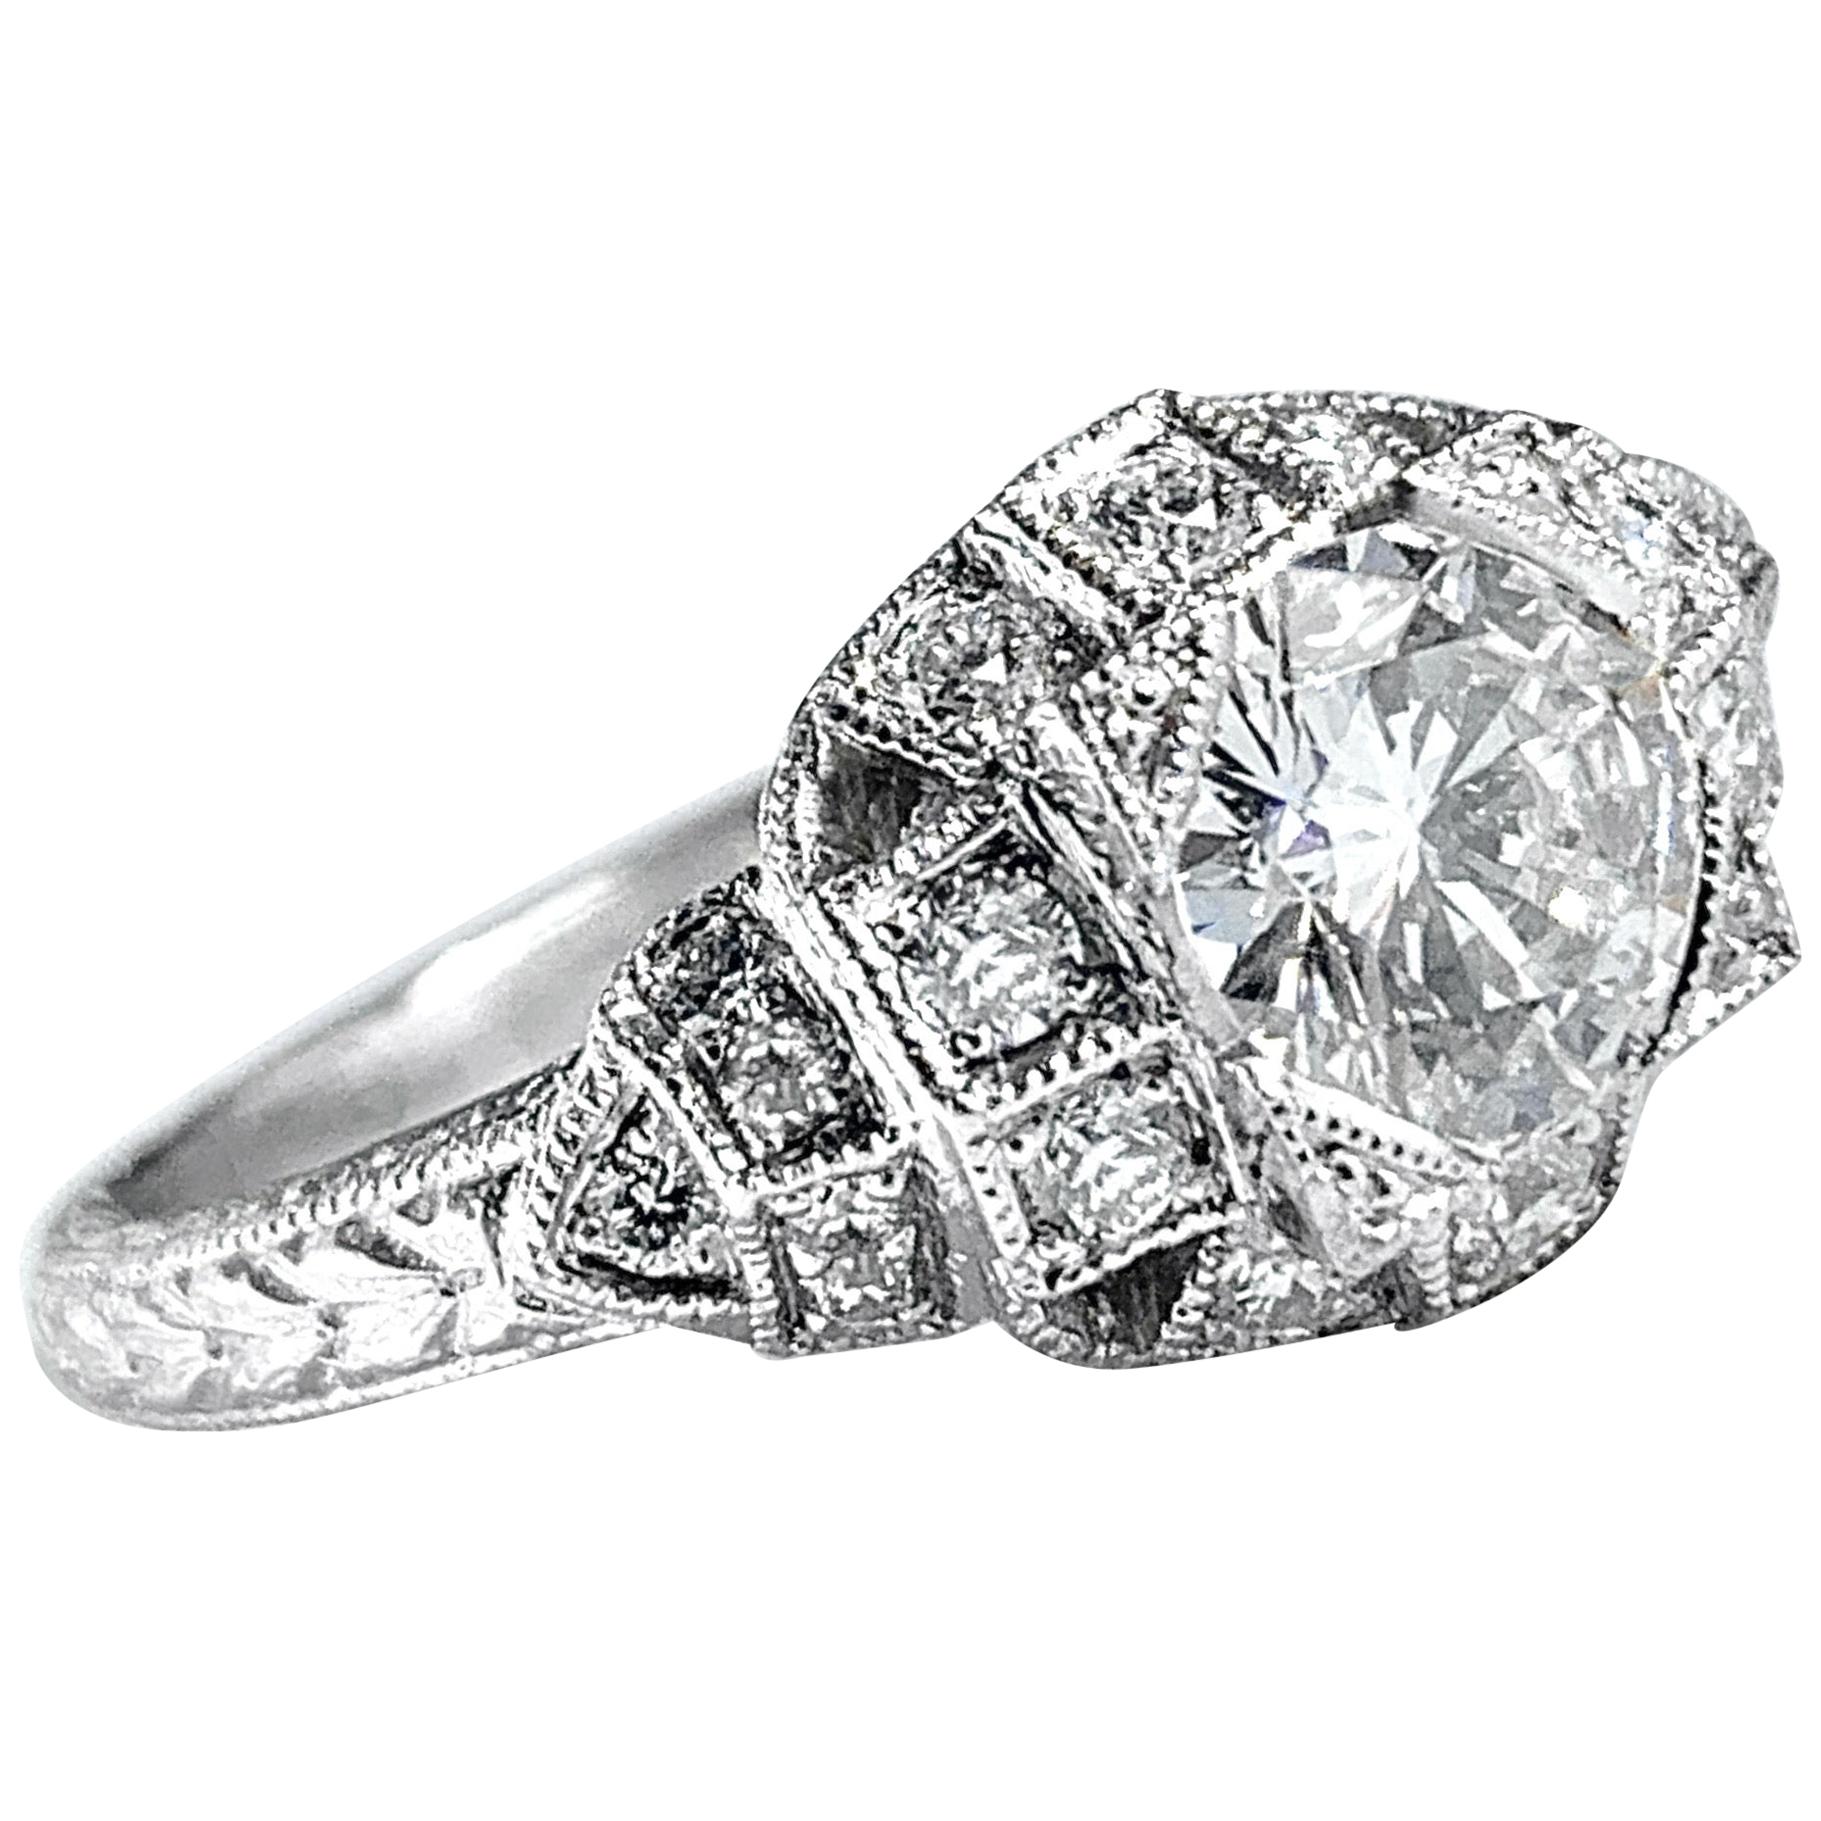 0.77 Carat Certified Diamond in Platinum "Layer Cake" Engagement Ring